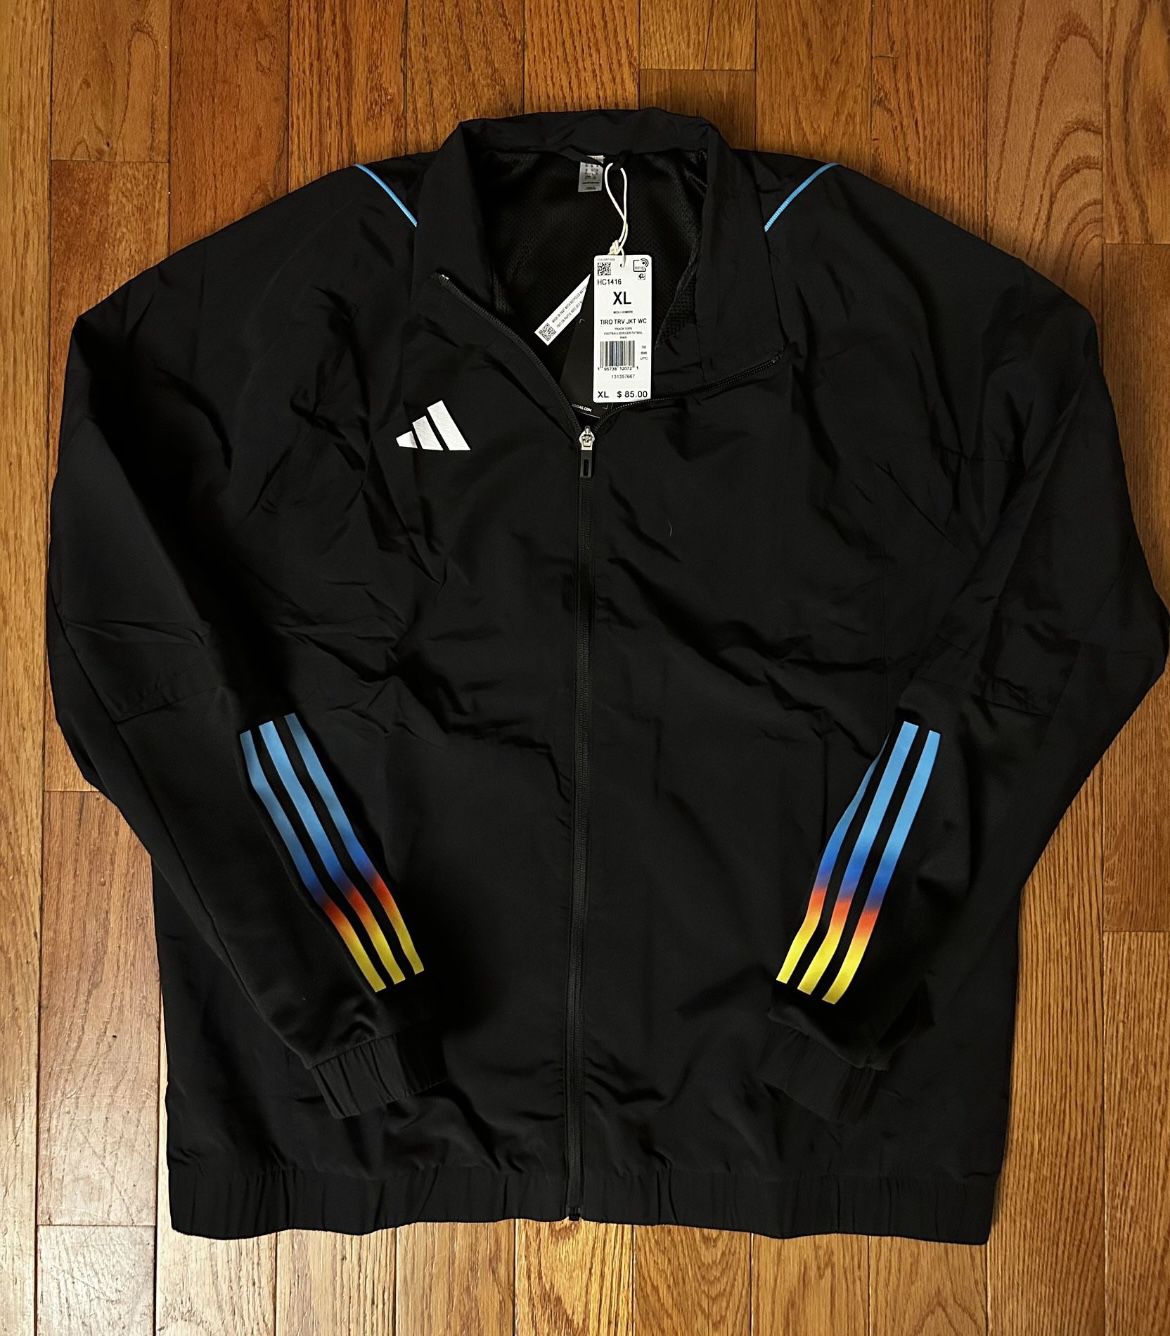 Adidas Tiro Soccer Jacket Size XL NEW